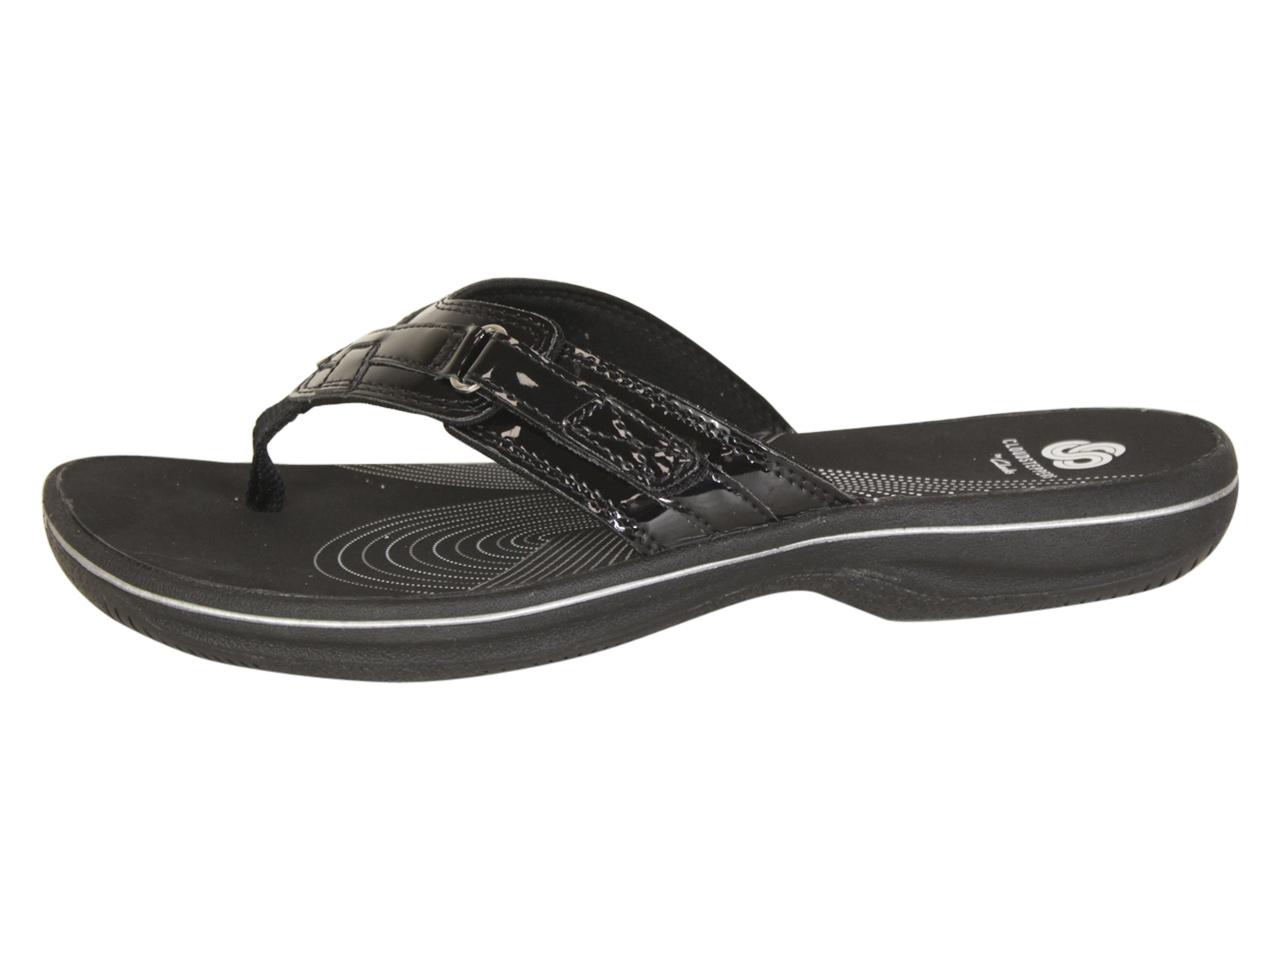 Clarks Women's Breeze Sea Flip Flops Sandals Shoes | JoyLot.com